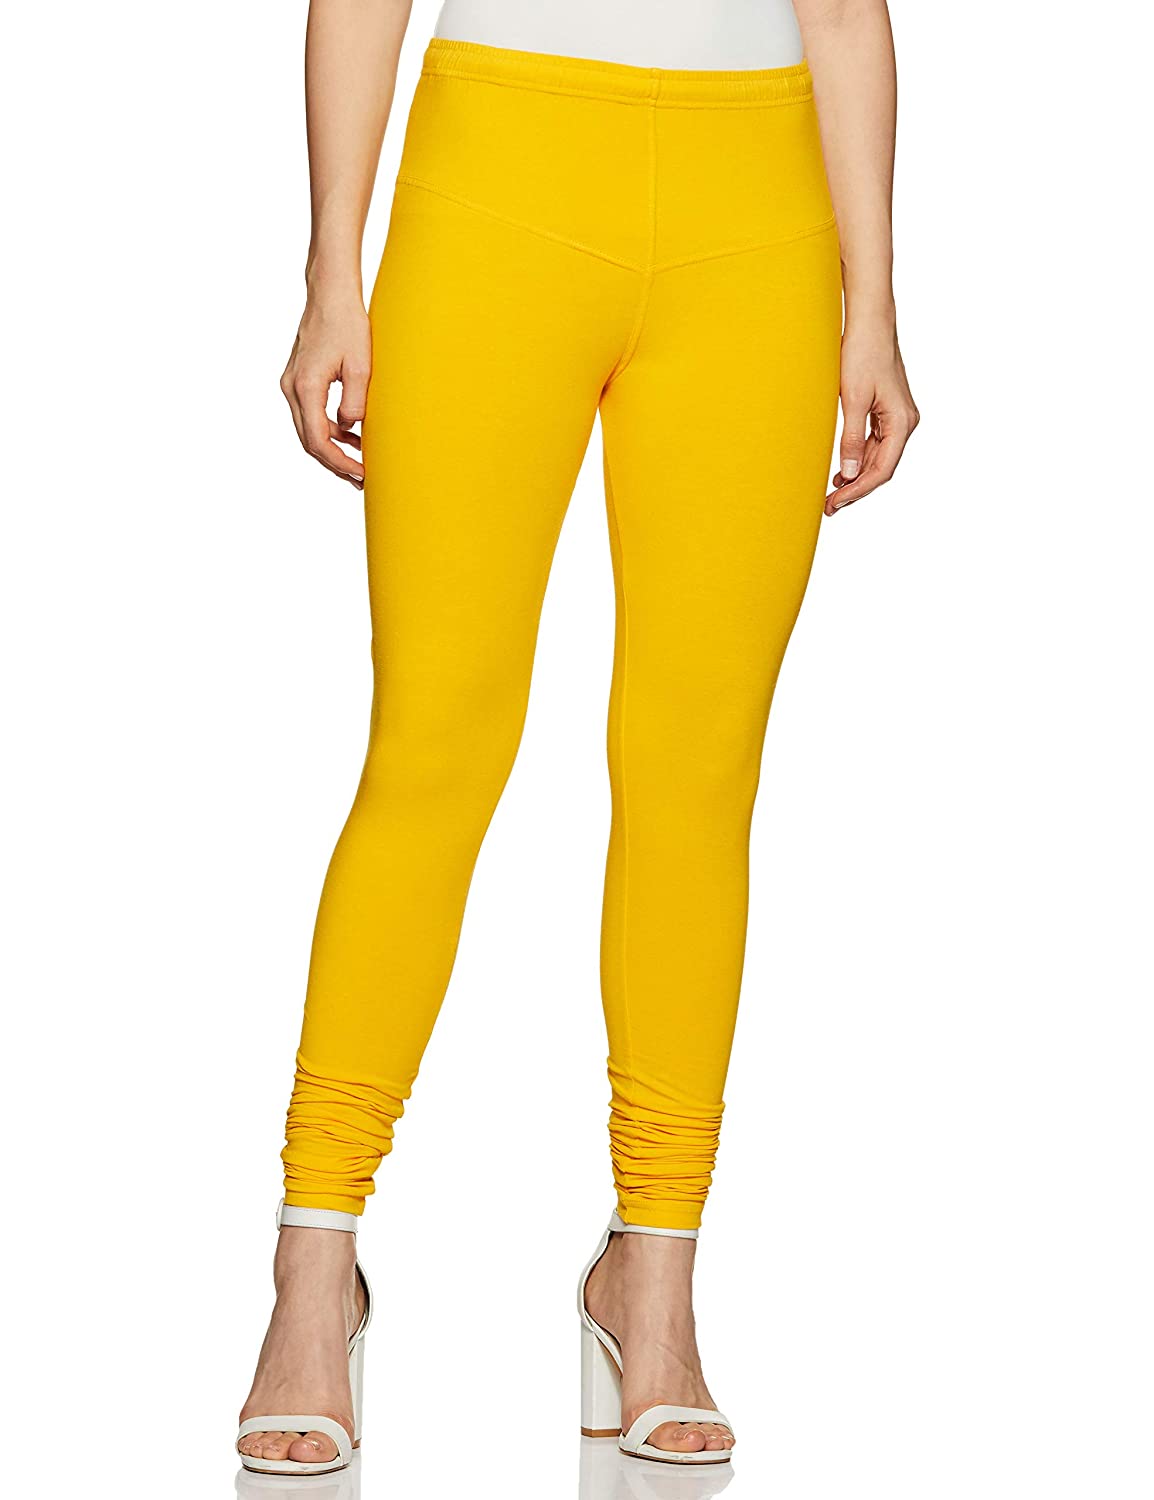 yellow and purple leggings combo pack of 2 stilento 3